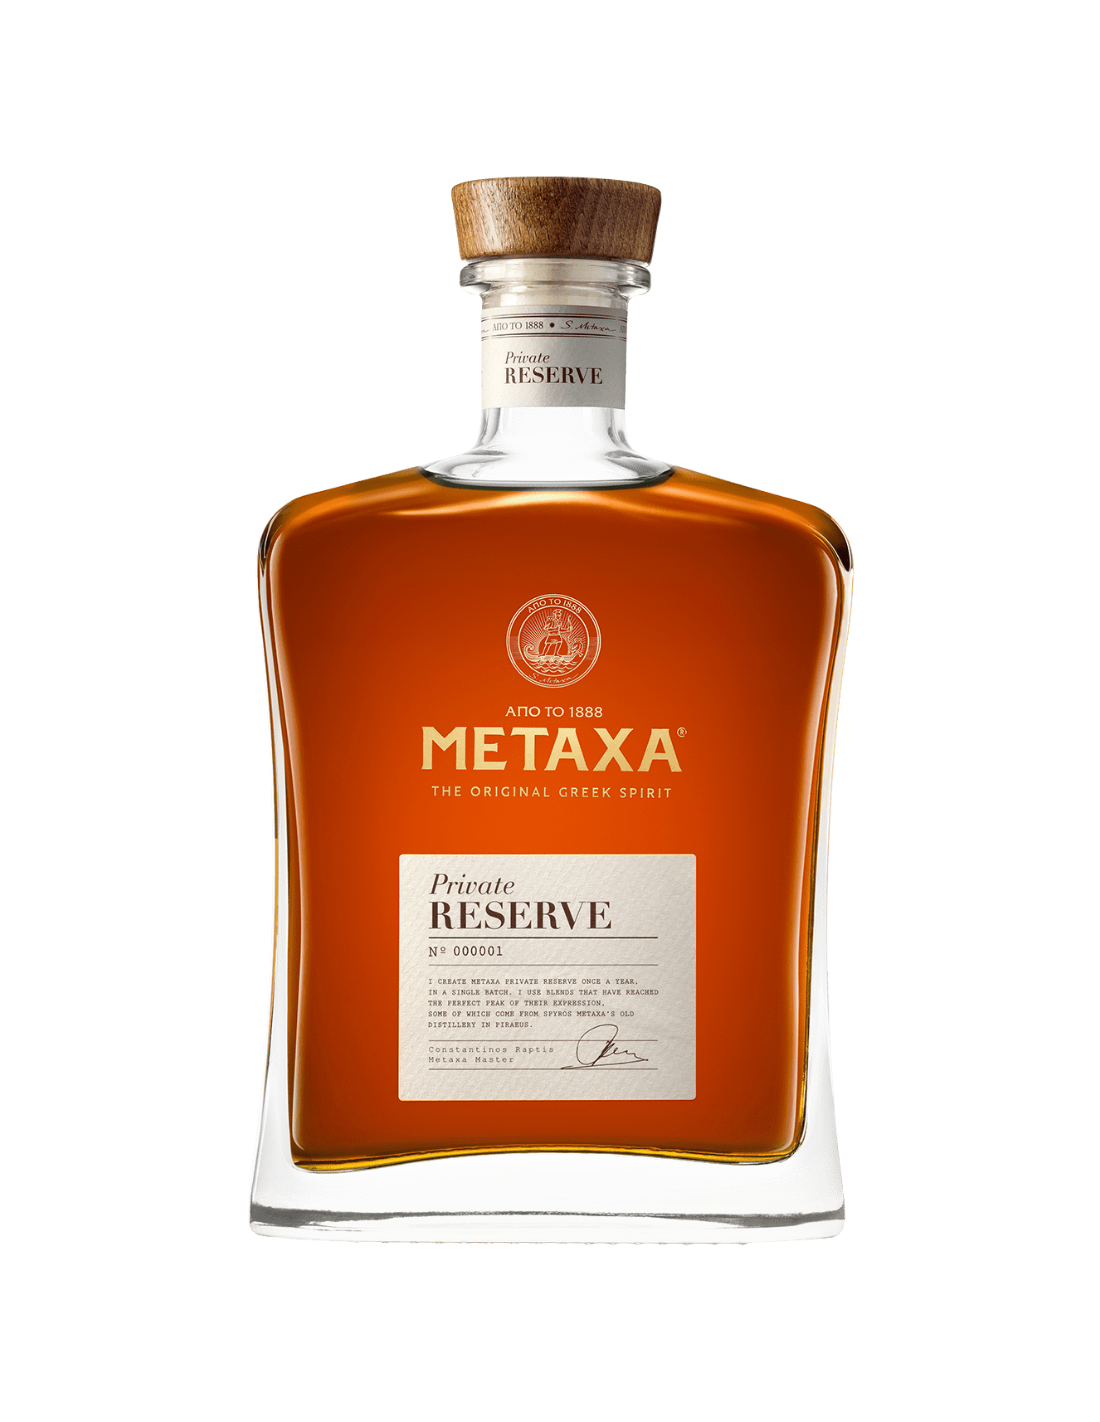 Brandy Metaxa Private Reserve, 40% alc., 0.7L, Grecia alcooldiscount.ro